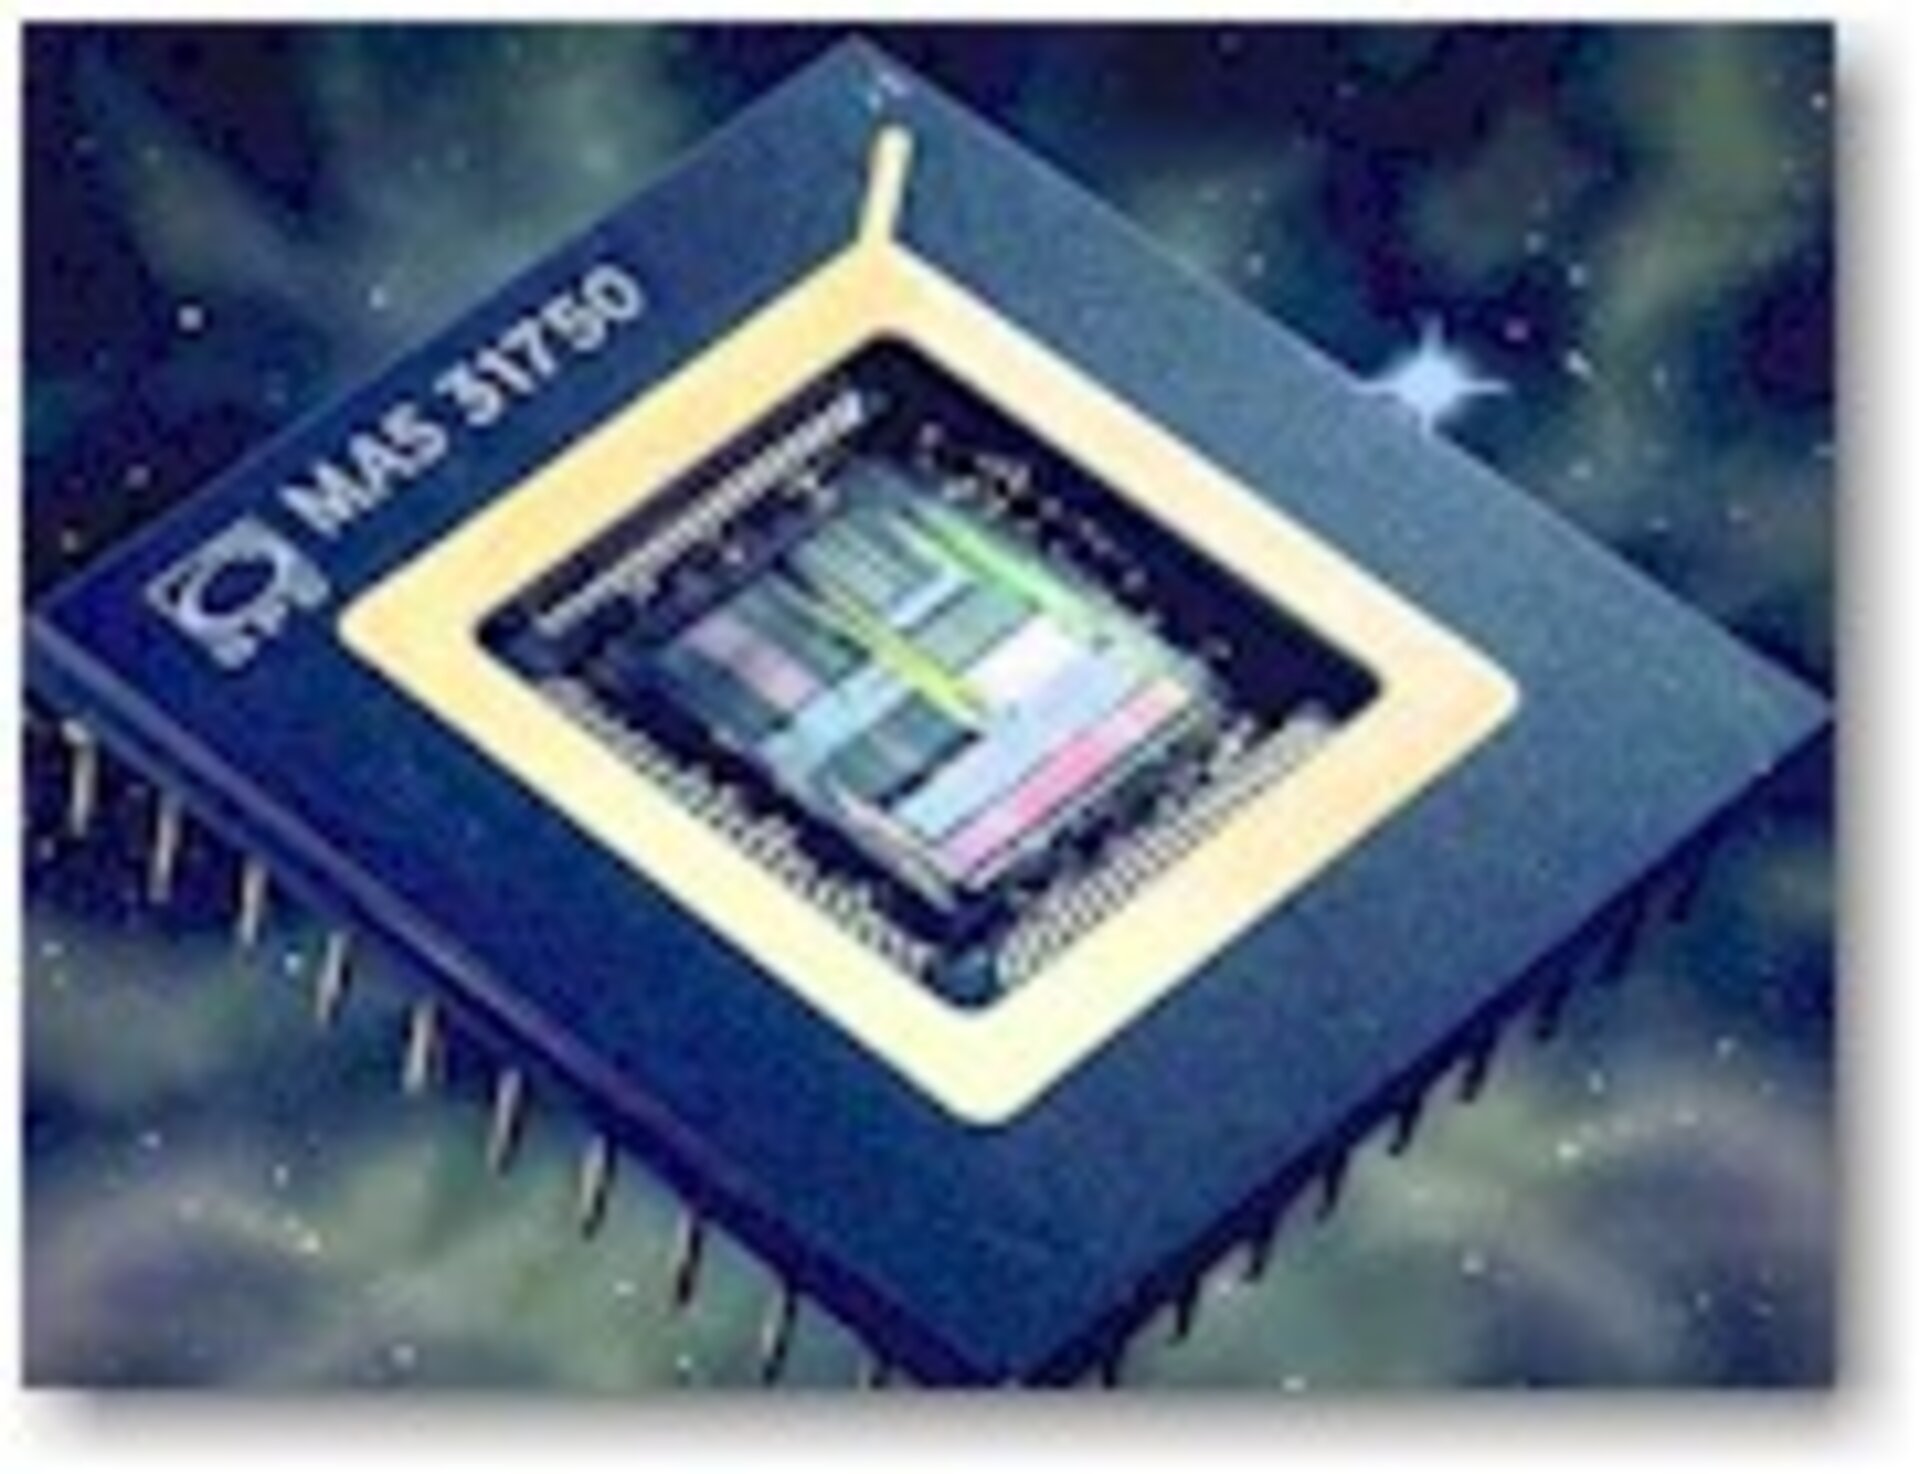 MA31750 16-bit microprocessor